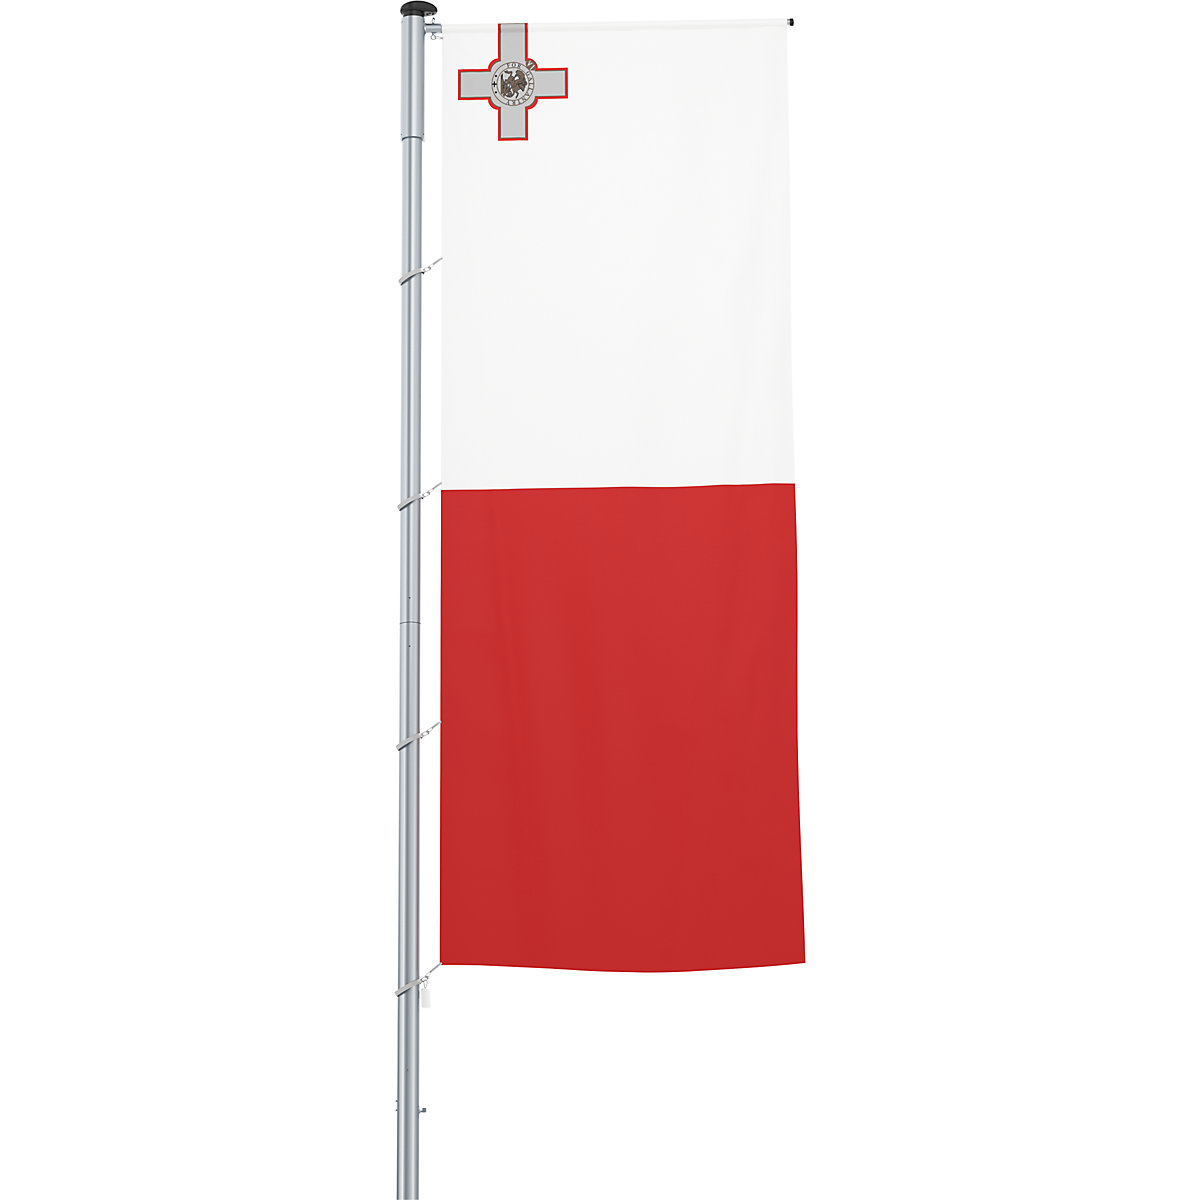 Steag pentru braț/drapel național – Mannus, format 1,2 x 3 m, Malta-18